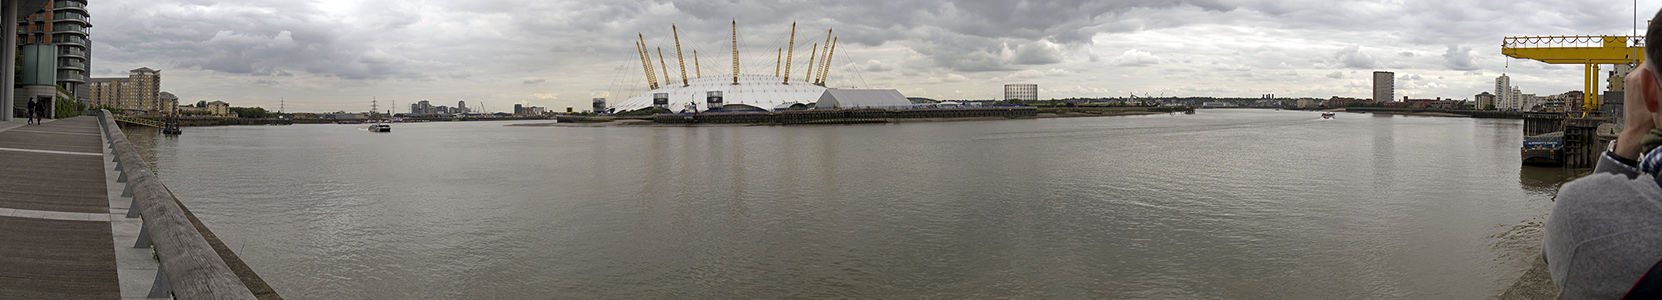 Blackwall, Themse, Greenwich Peninsula mit The O2 (Millennium Dome) London